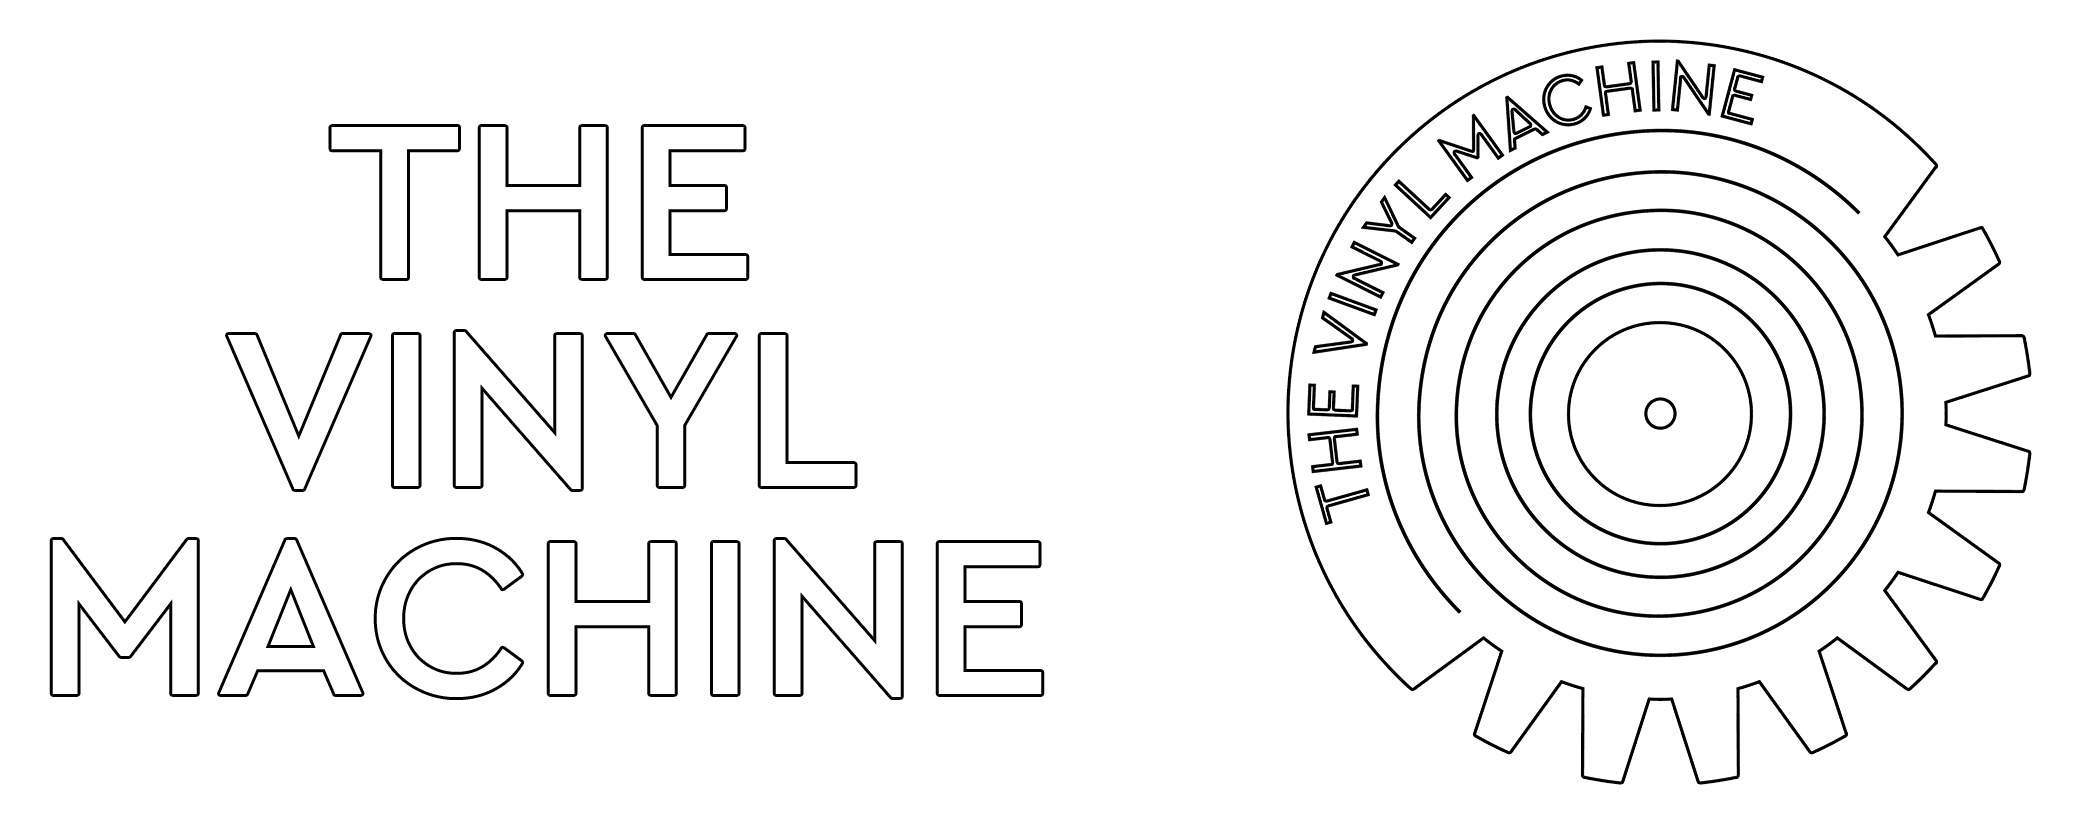 Vinyl Machine Logo